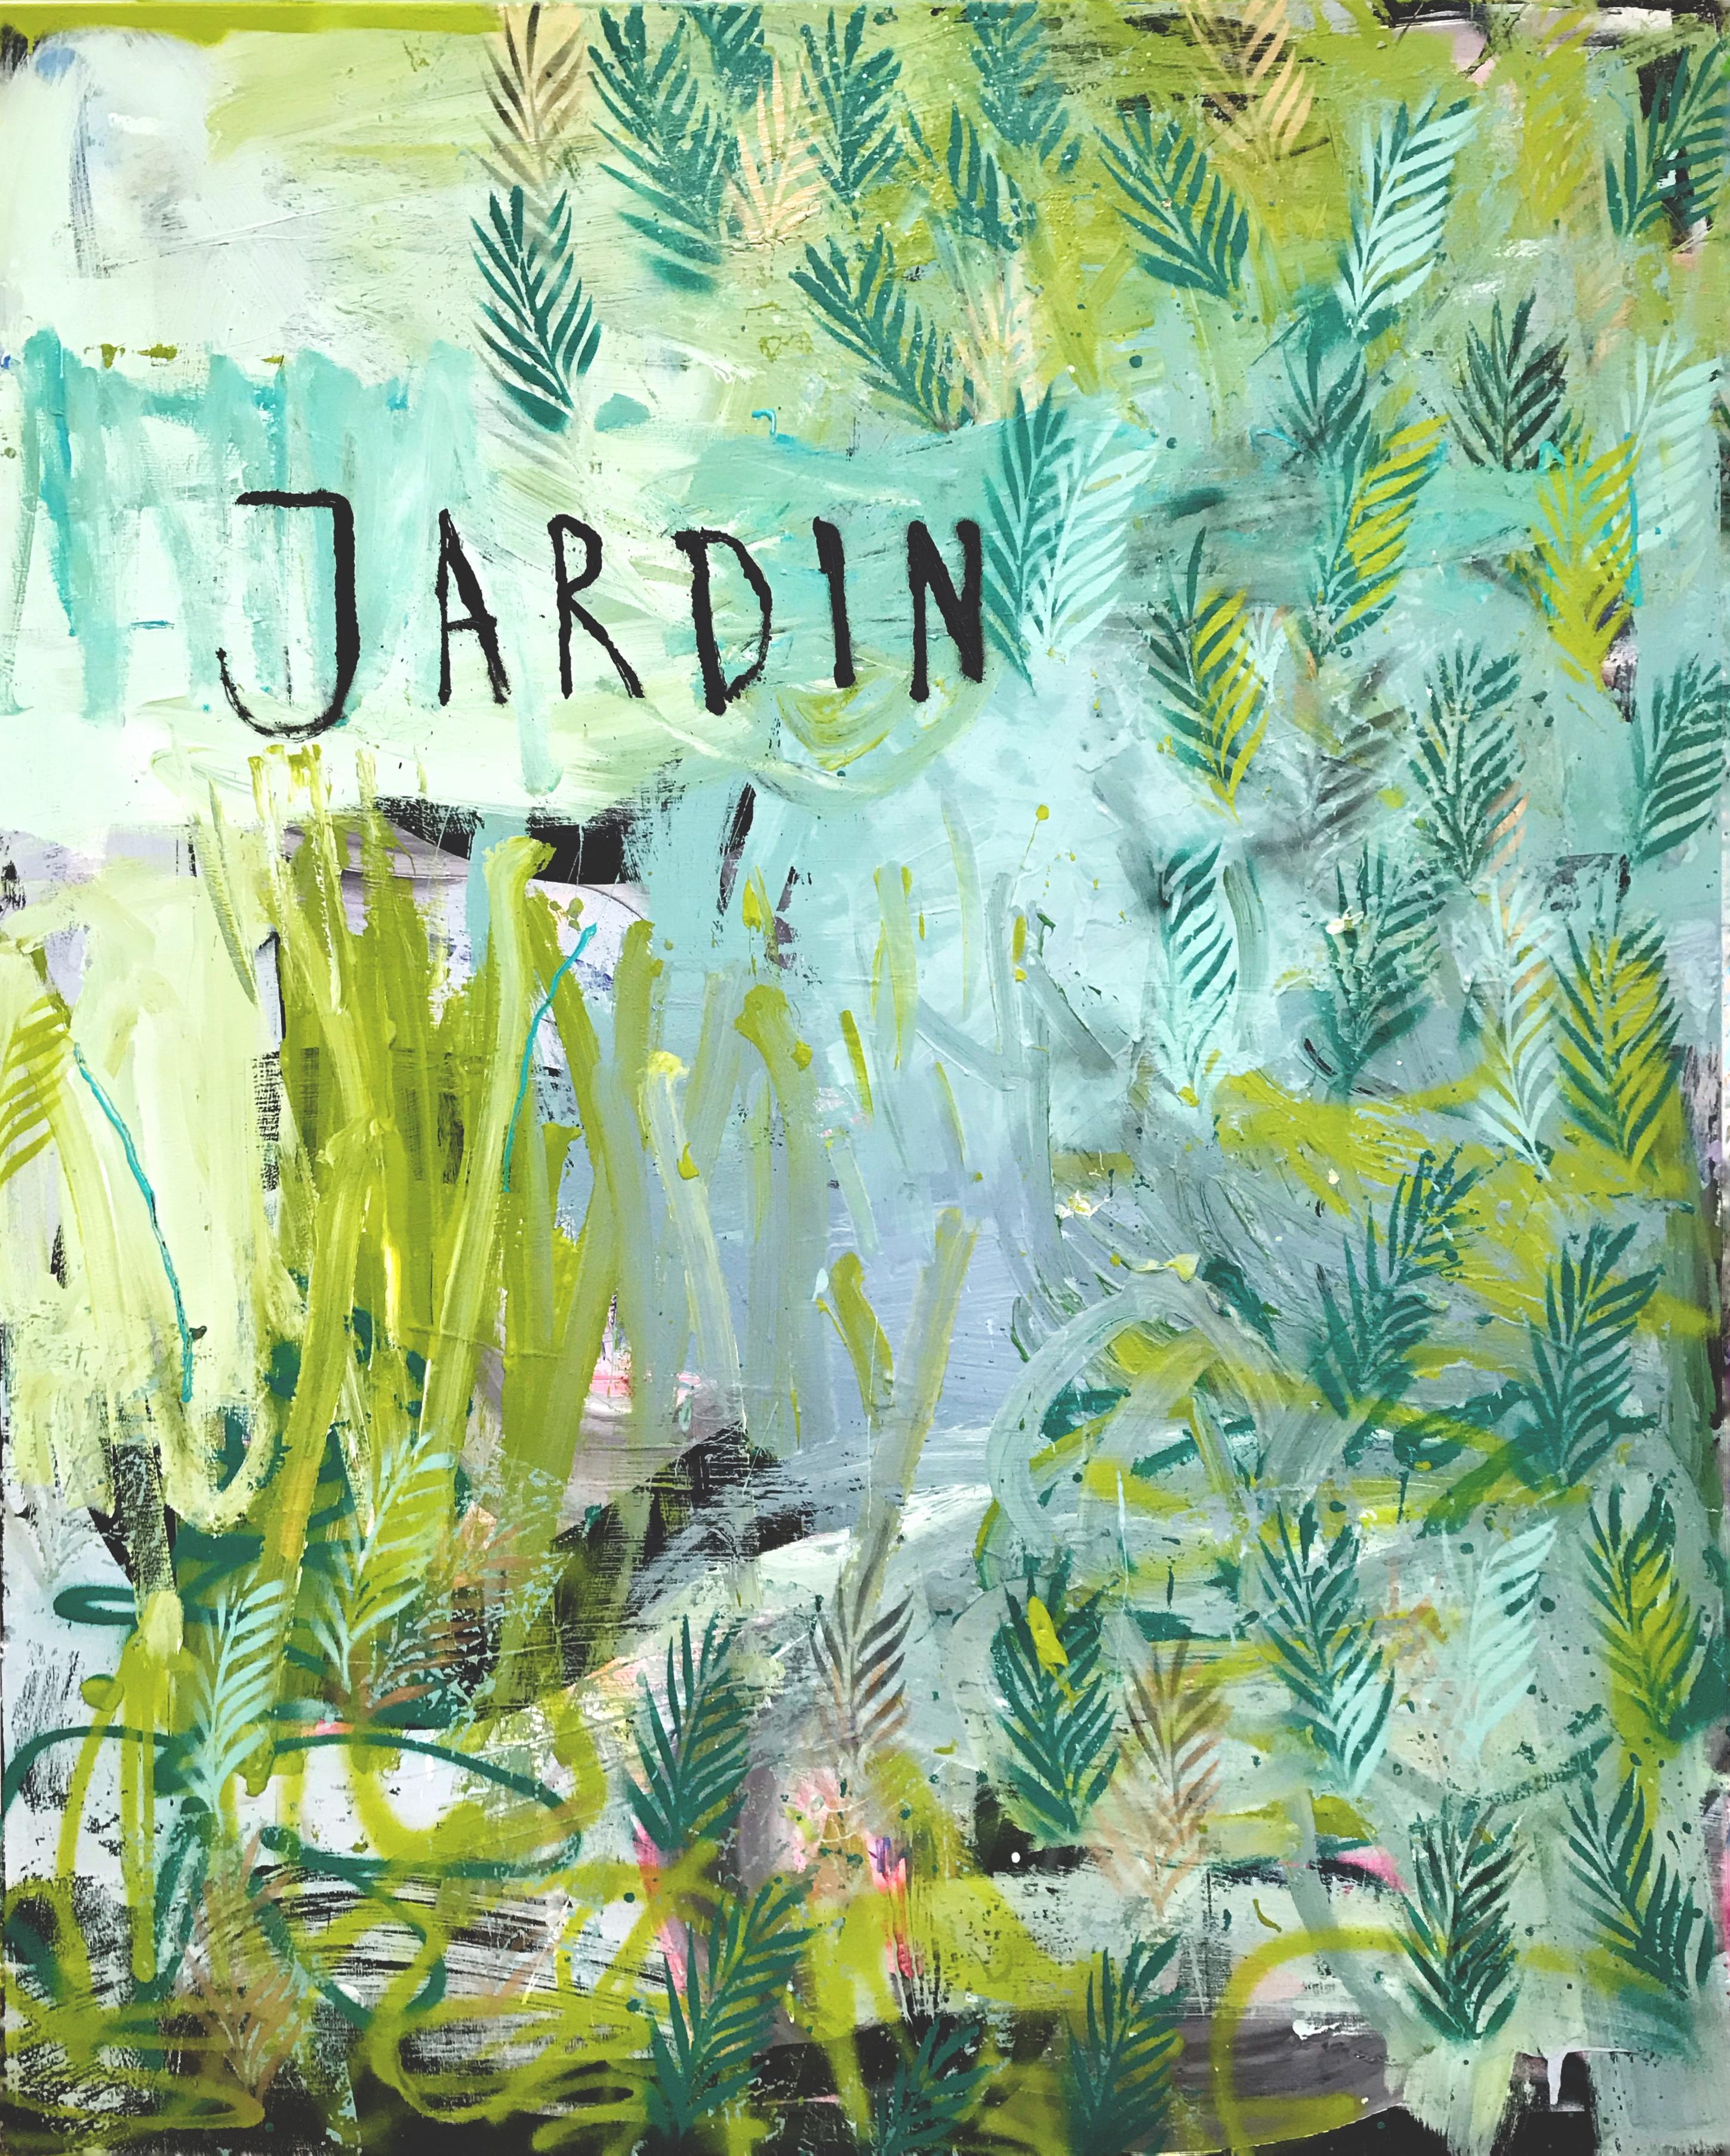 Jardin - Jungle, Garden, expressive painting, abstract, Contemporary Art, green - Painting by Manuela Karin Knaut